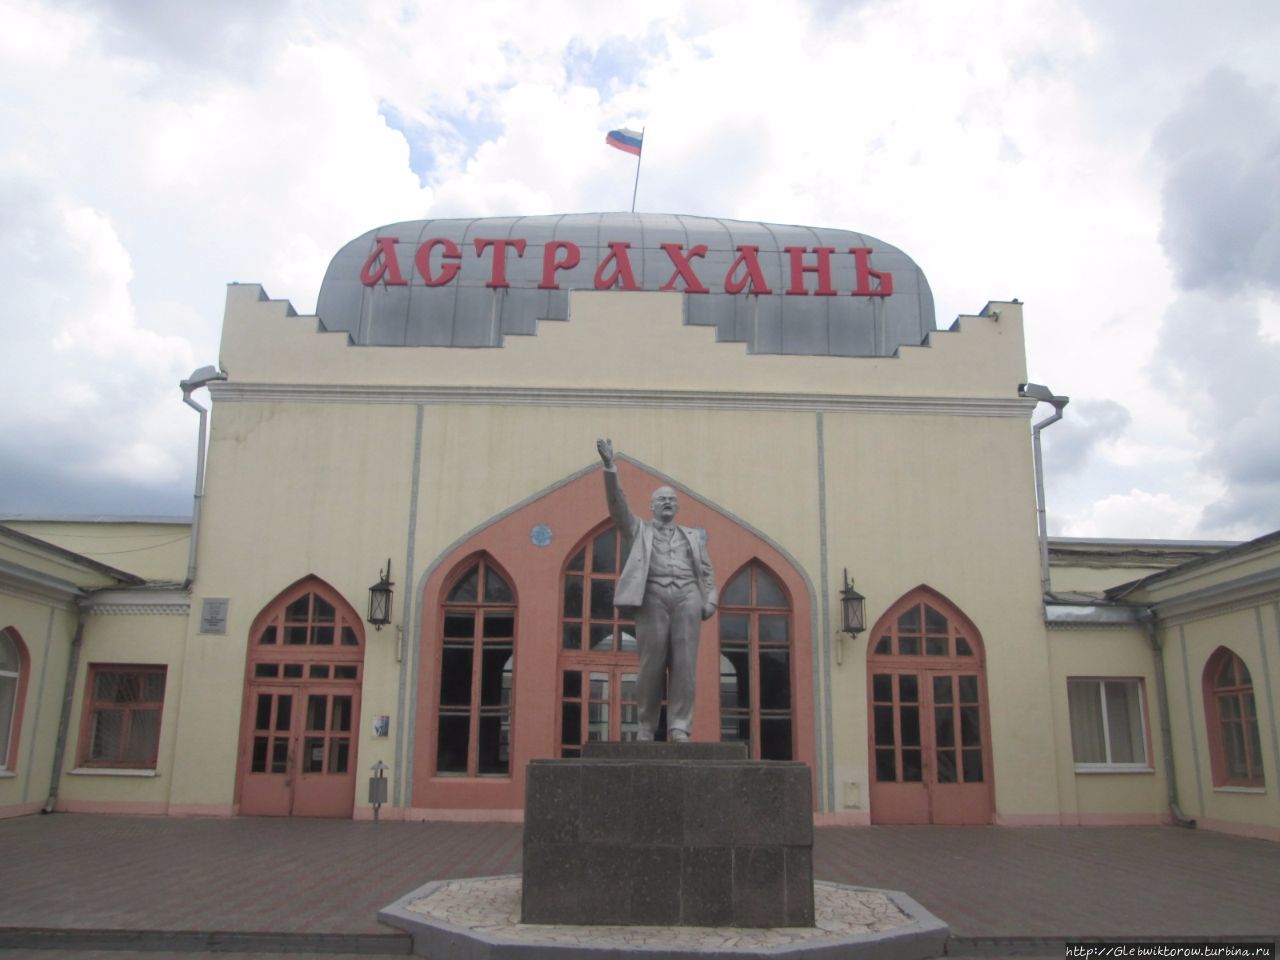 Жд астрахань телефон. Старый вокзал Астрахань. Железнодорожный вокзал Астрахань. Астраханский ЖД вокзал. Старое здание вокзала в Астрахани.